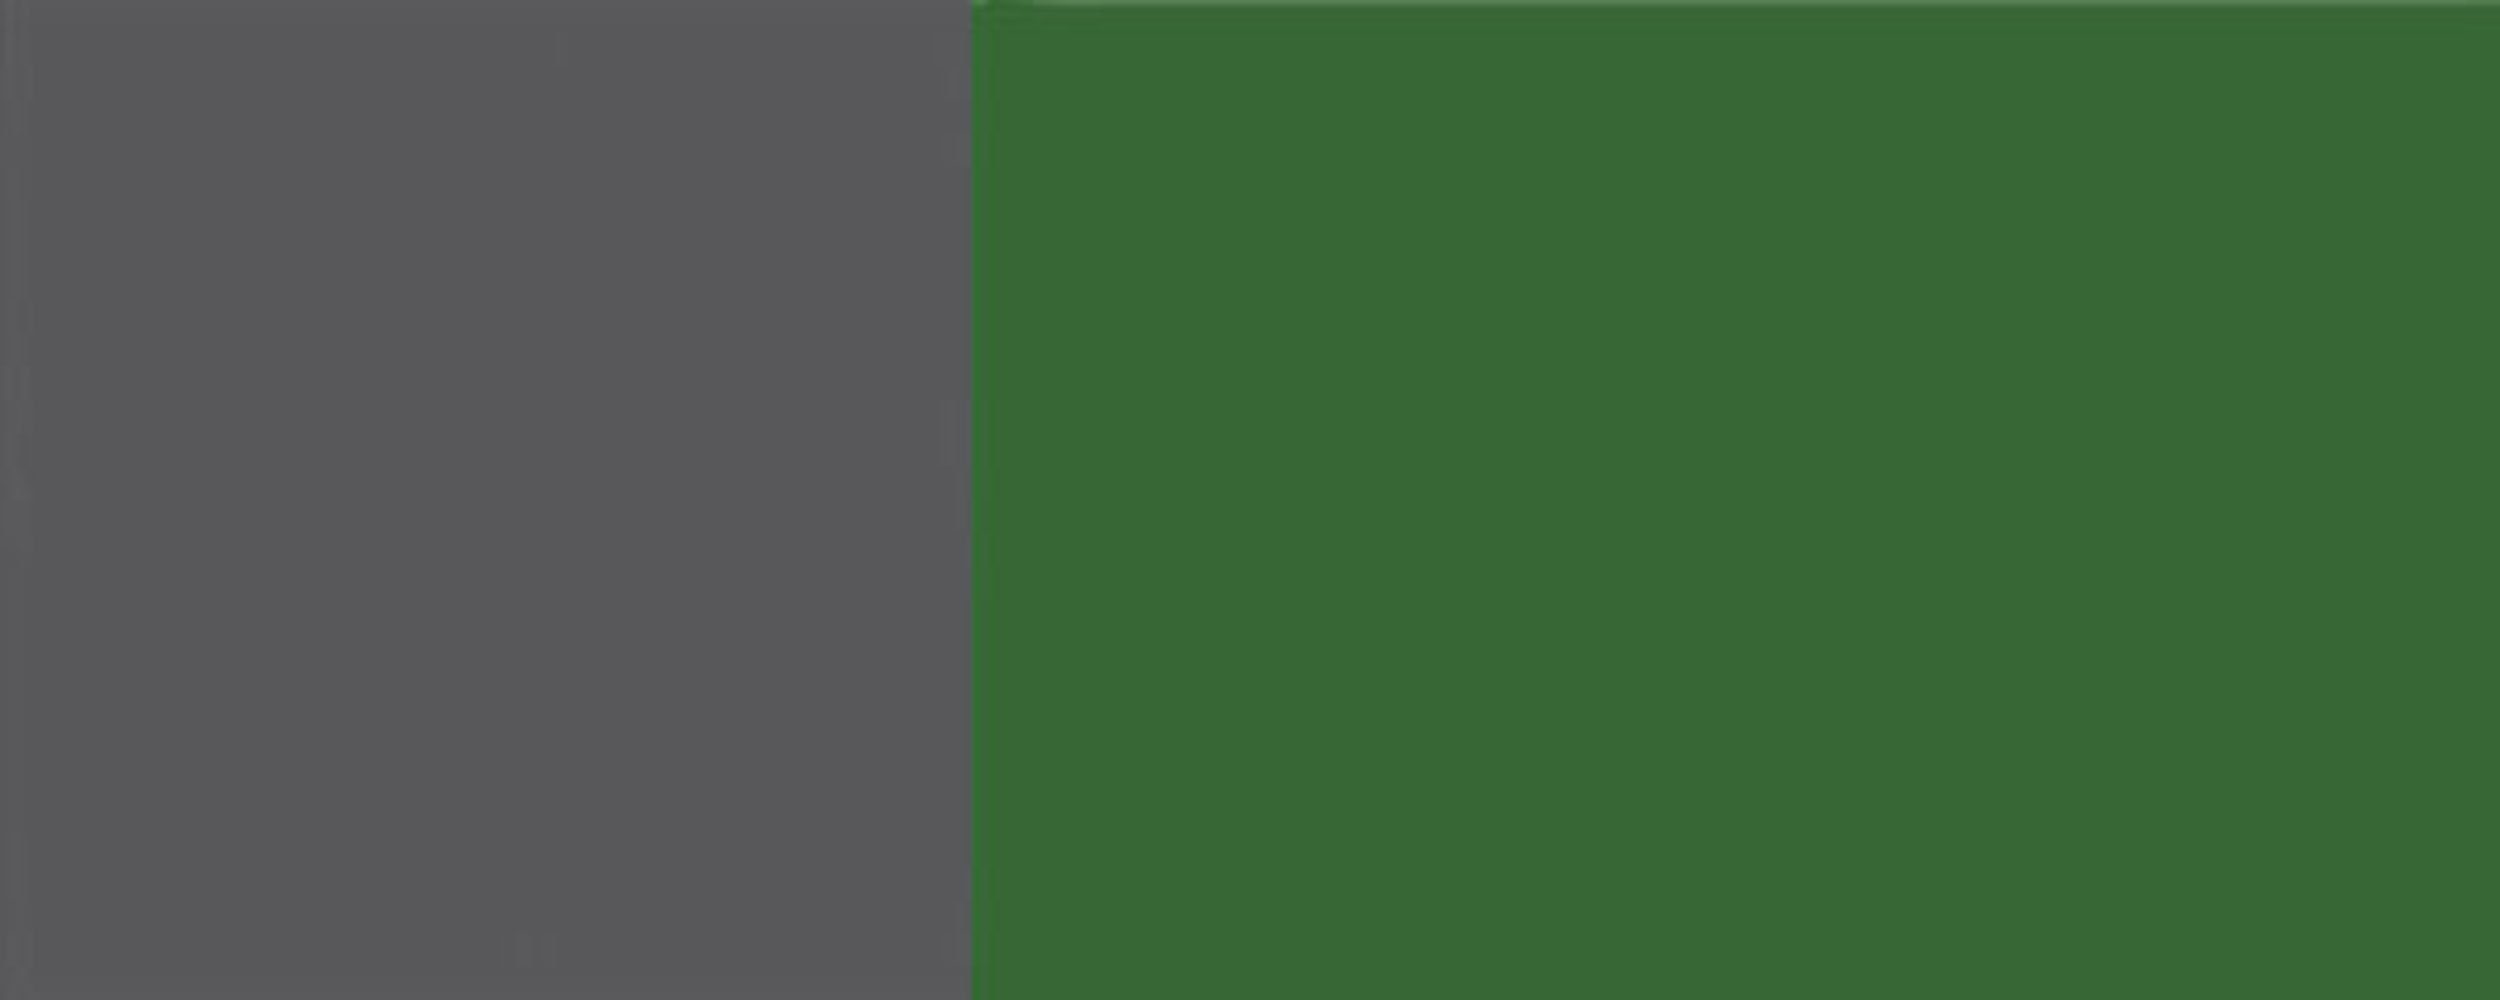 Feldmann-Wohnen Klapphängeschrank Florence 1-türig Ausführung Hochglanz 50cm wählbar und RAL 6001 smaragdgrün Front-, Korpusfarbe (Florence) grifflos